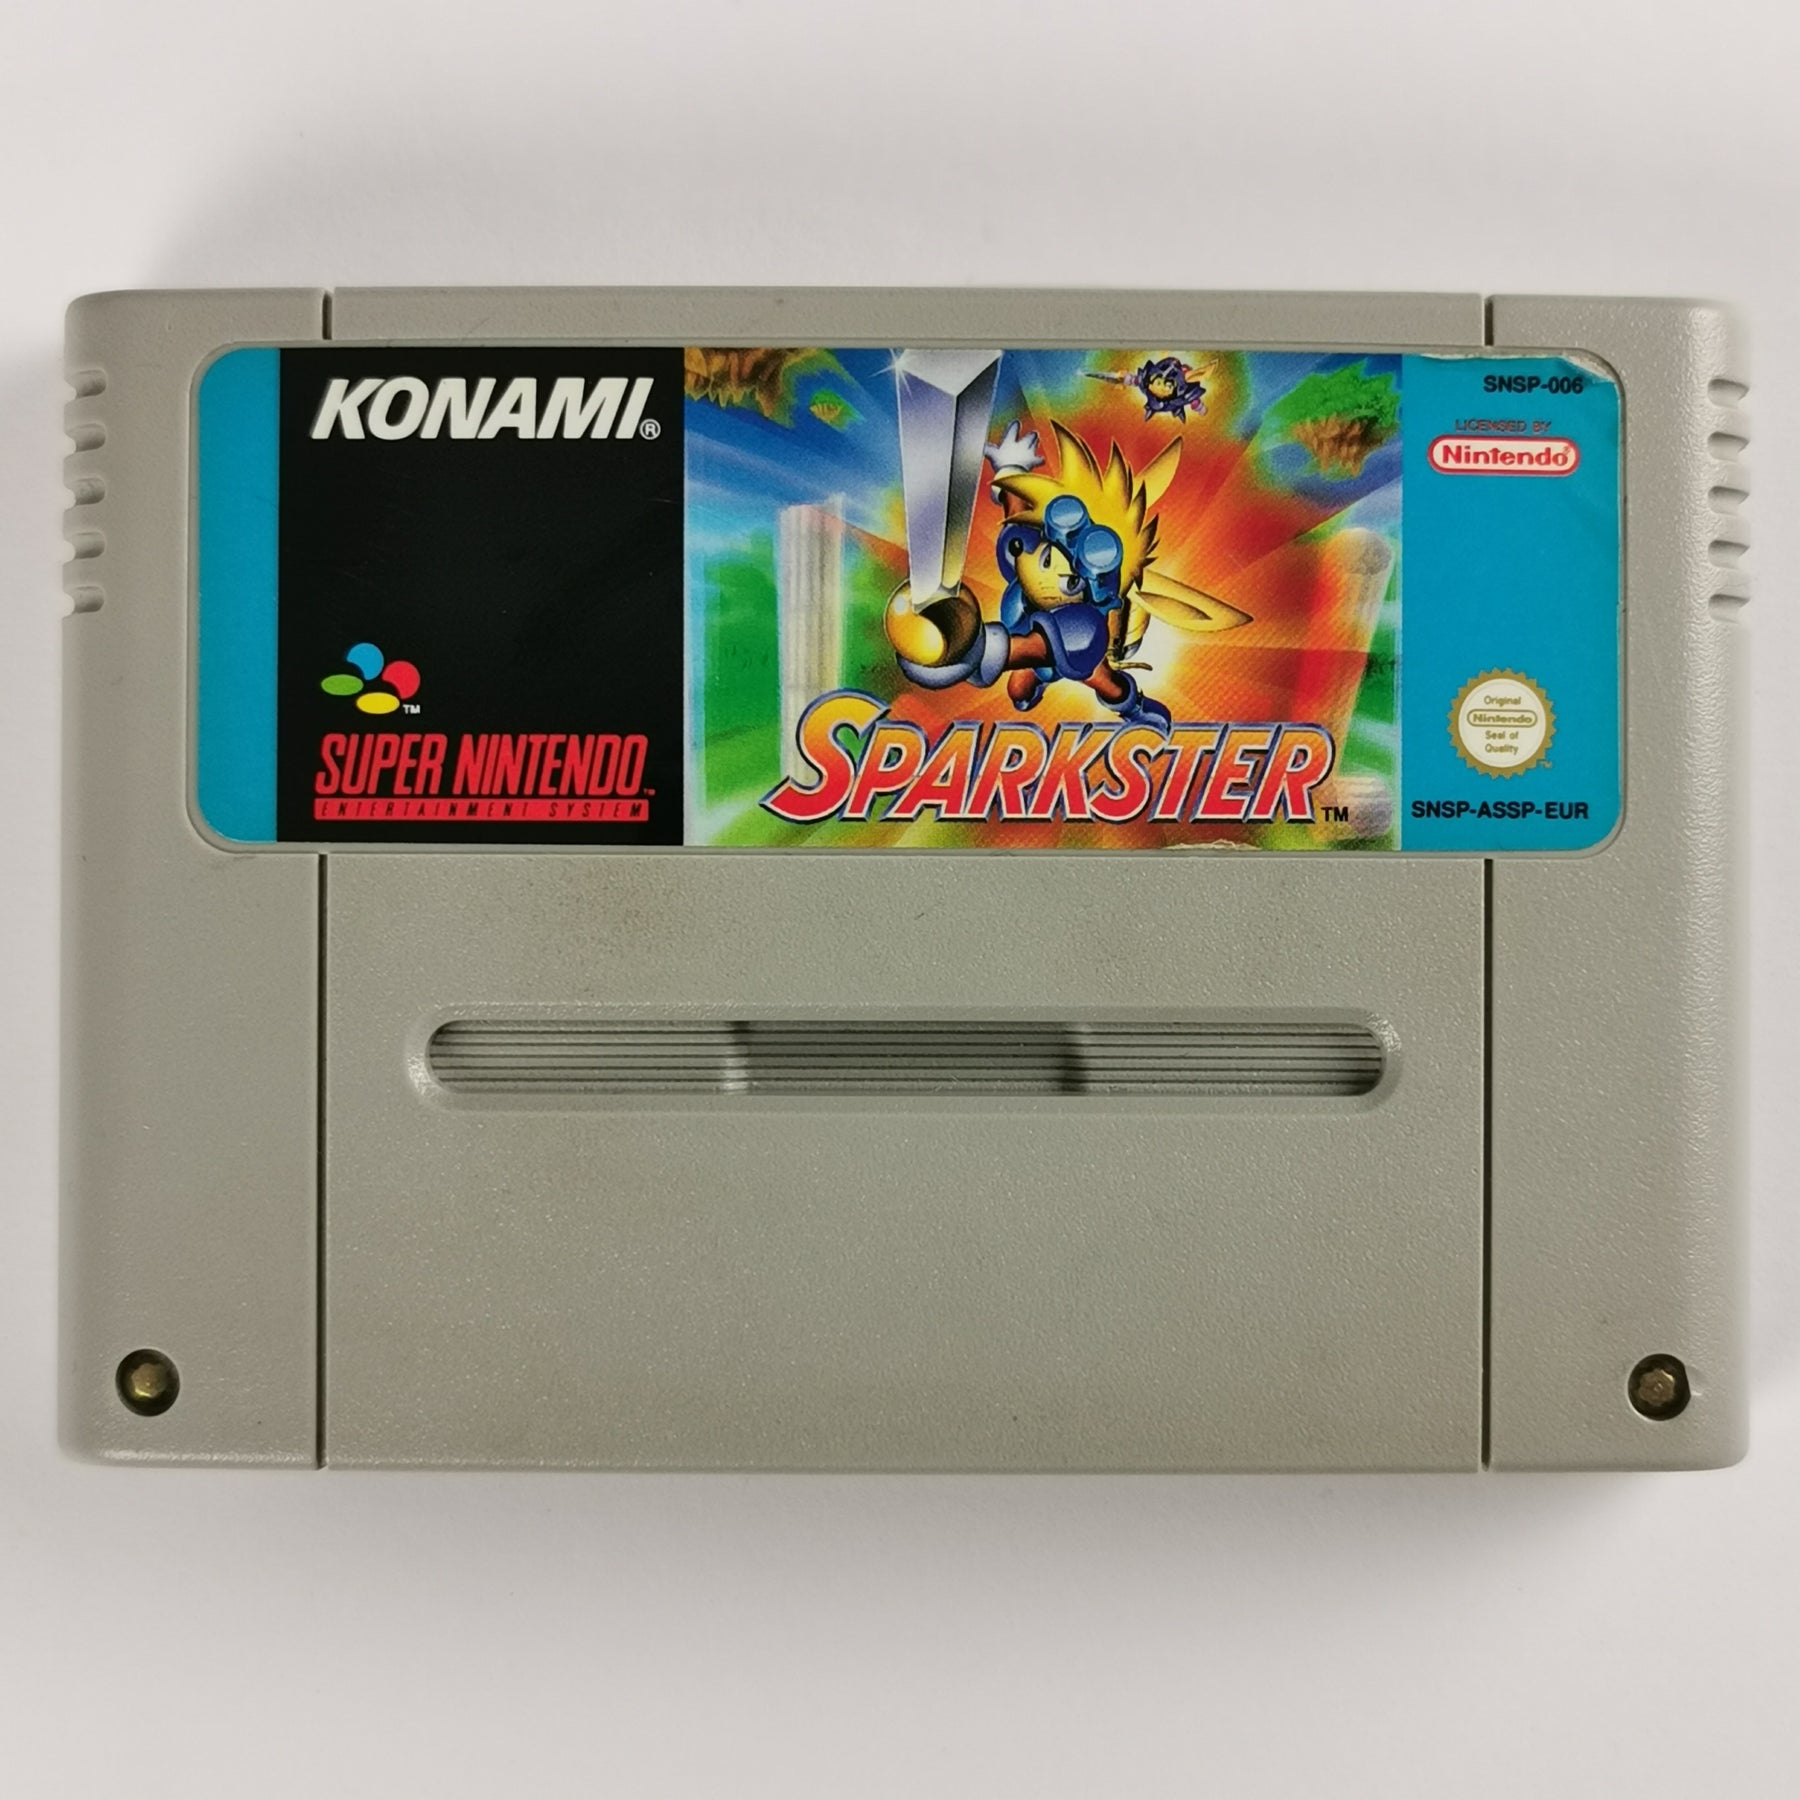 Sparkster [SNES] Super Nintendo